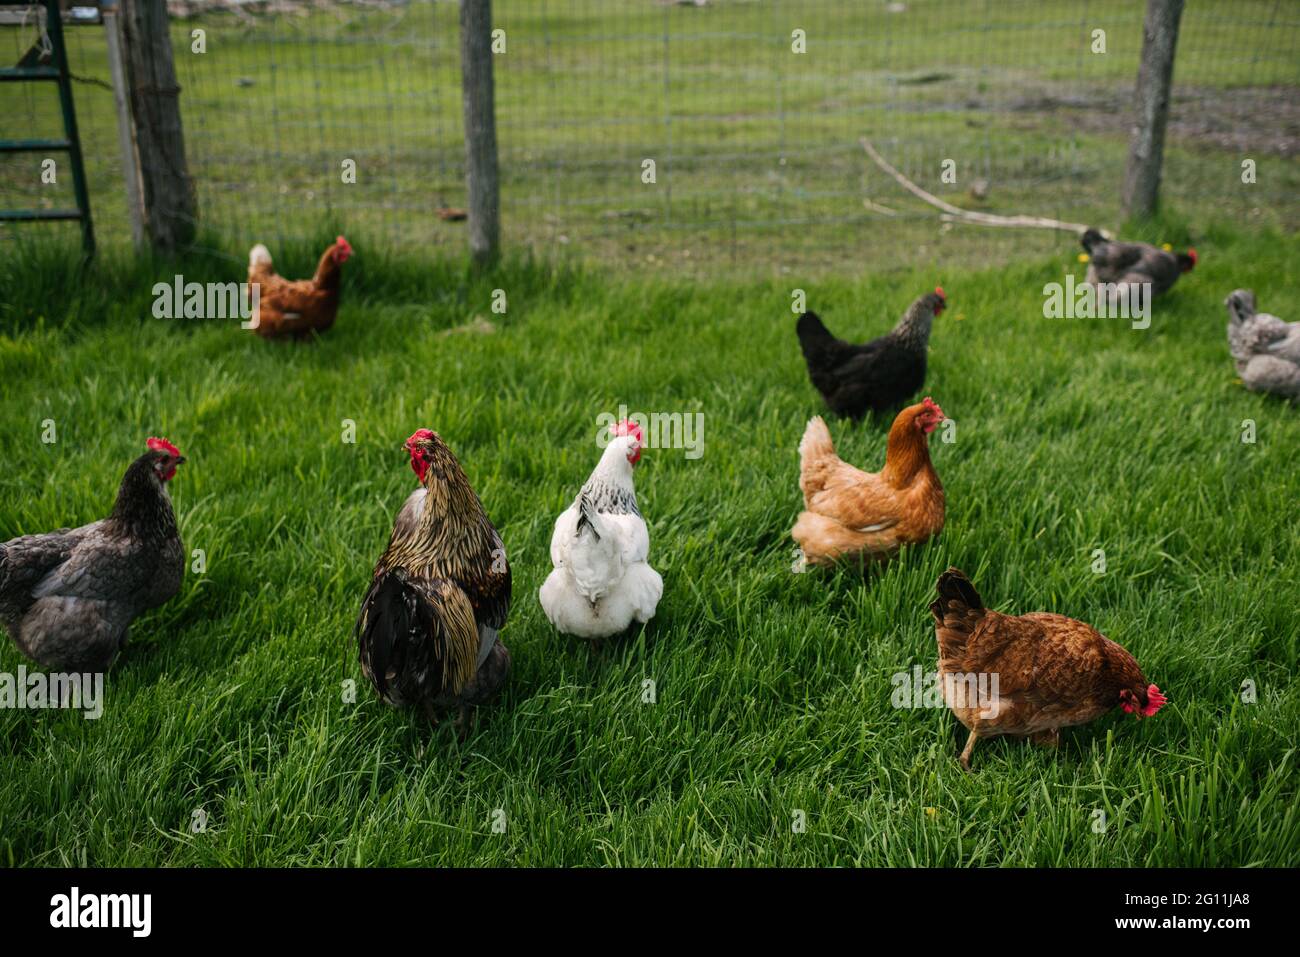 Canada, Ontario, Kingston, Chickens in grassy field Stock Photo